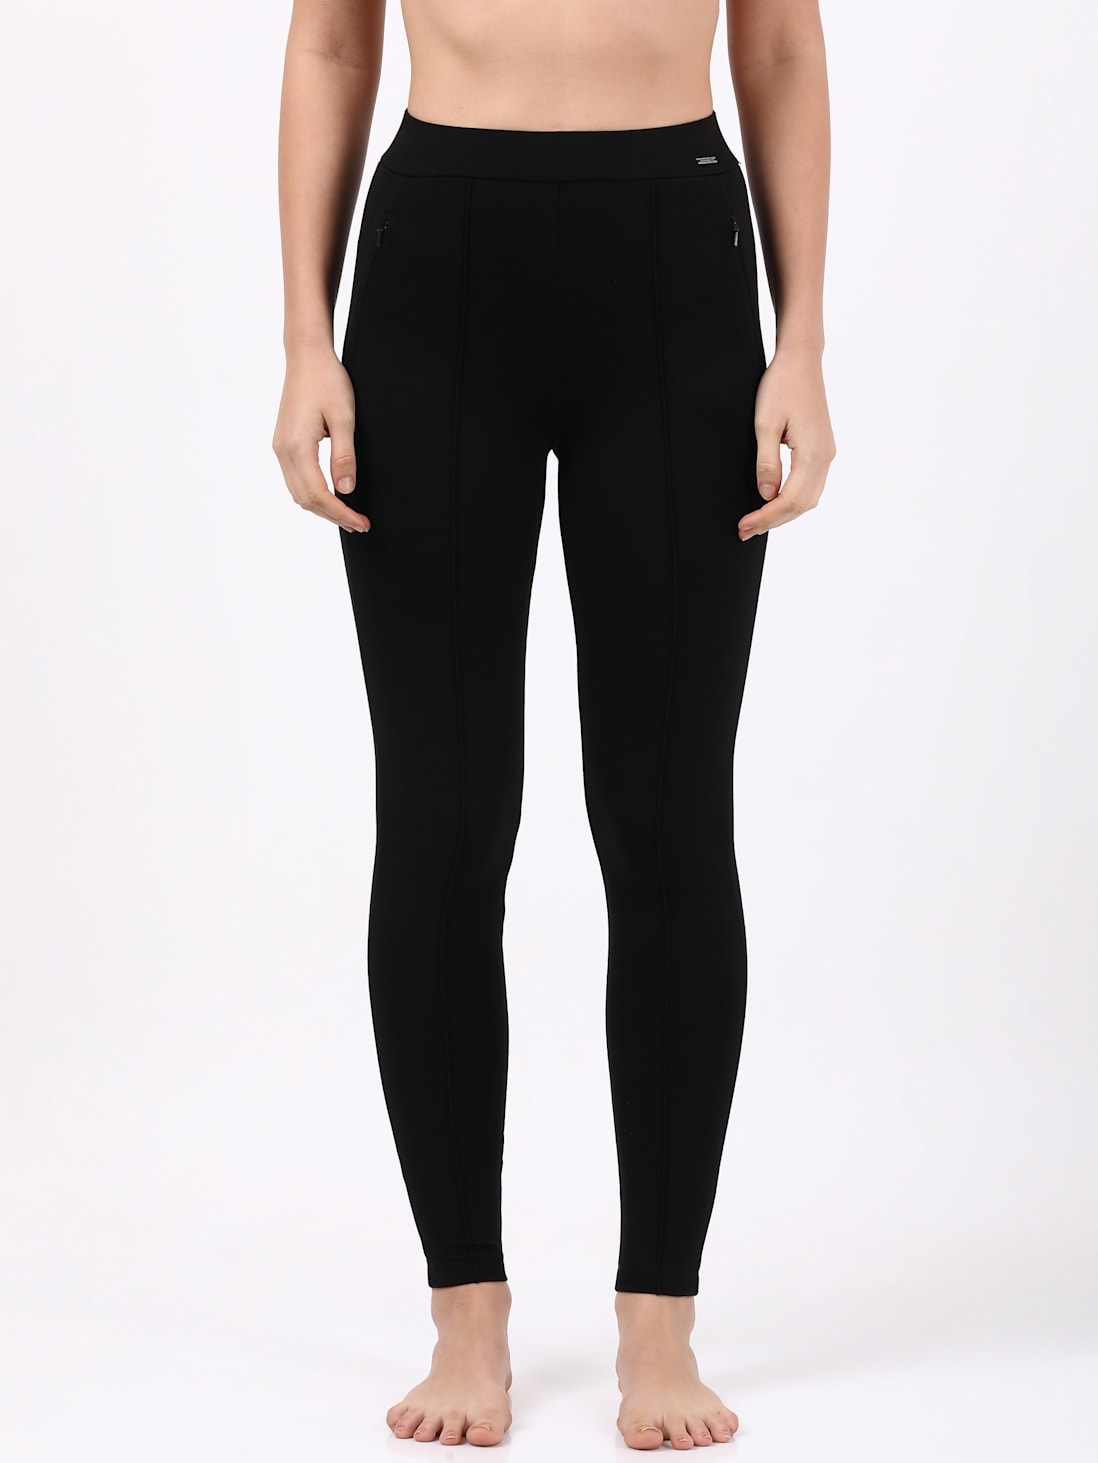 Buy Jockey Kids Black Solid Leggings for Girls Clothing Online @ Tata CLiQ